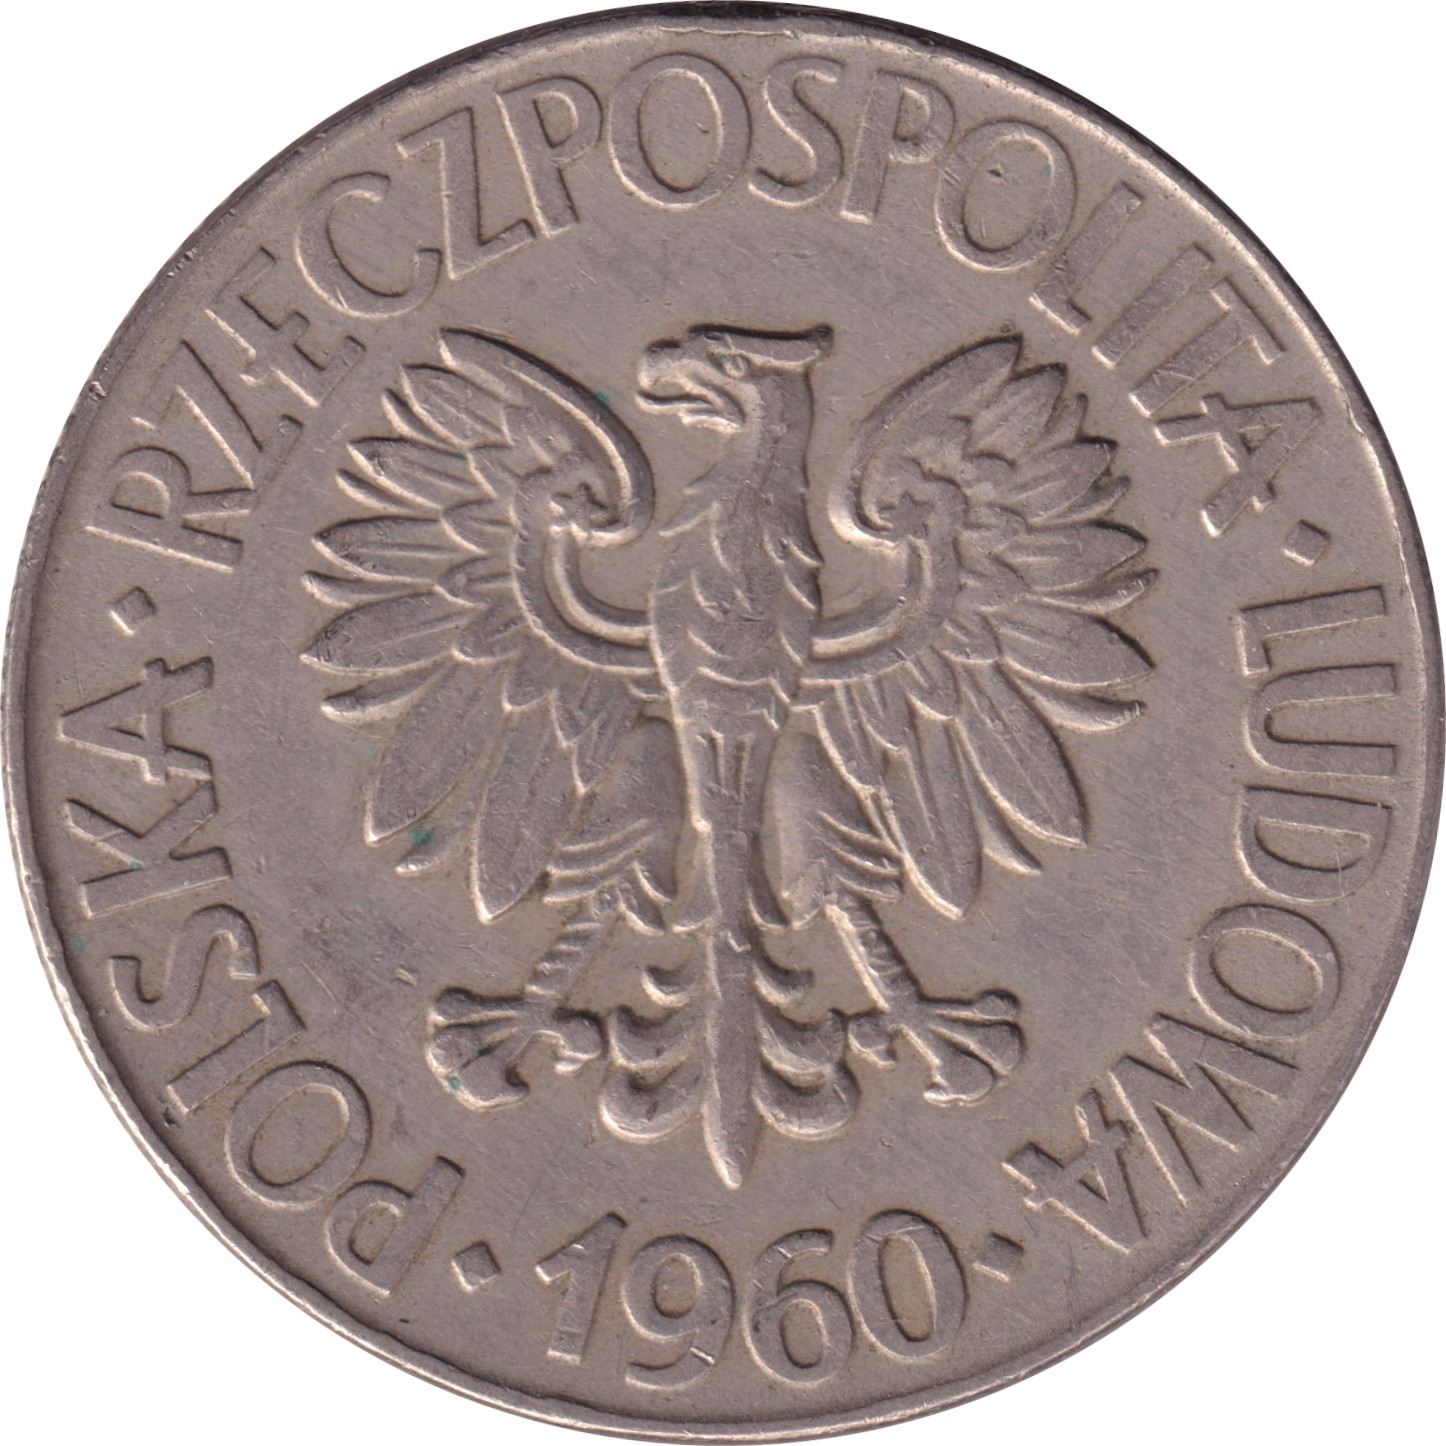 10 zlotych - République populaire - Tadeusz Kosciuszko